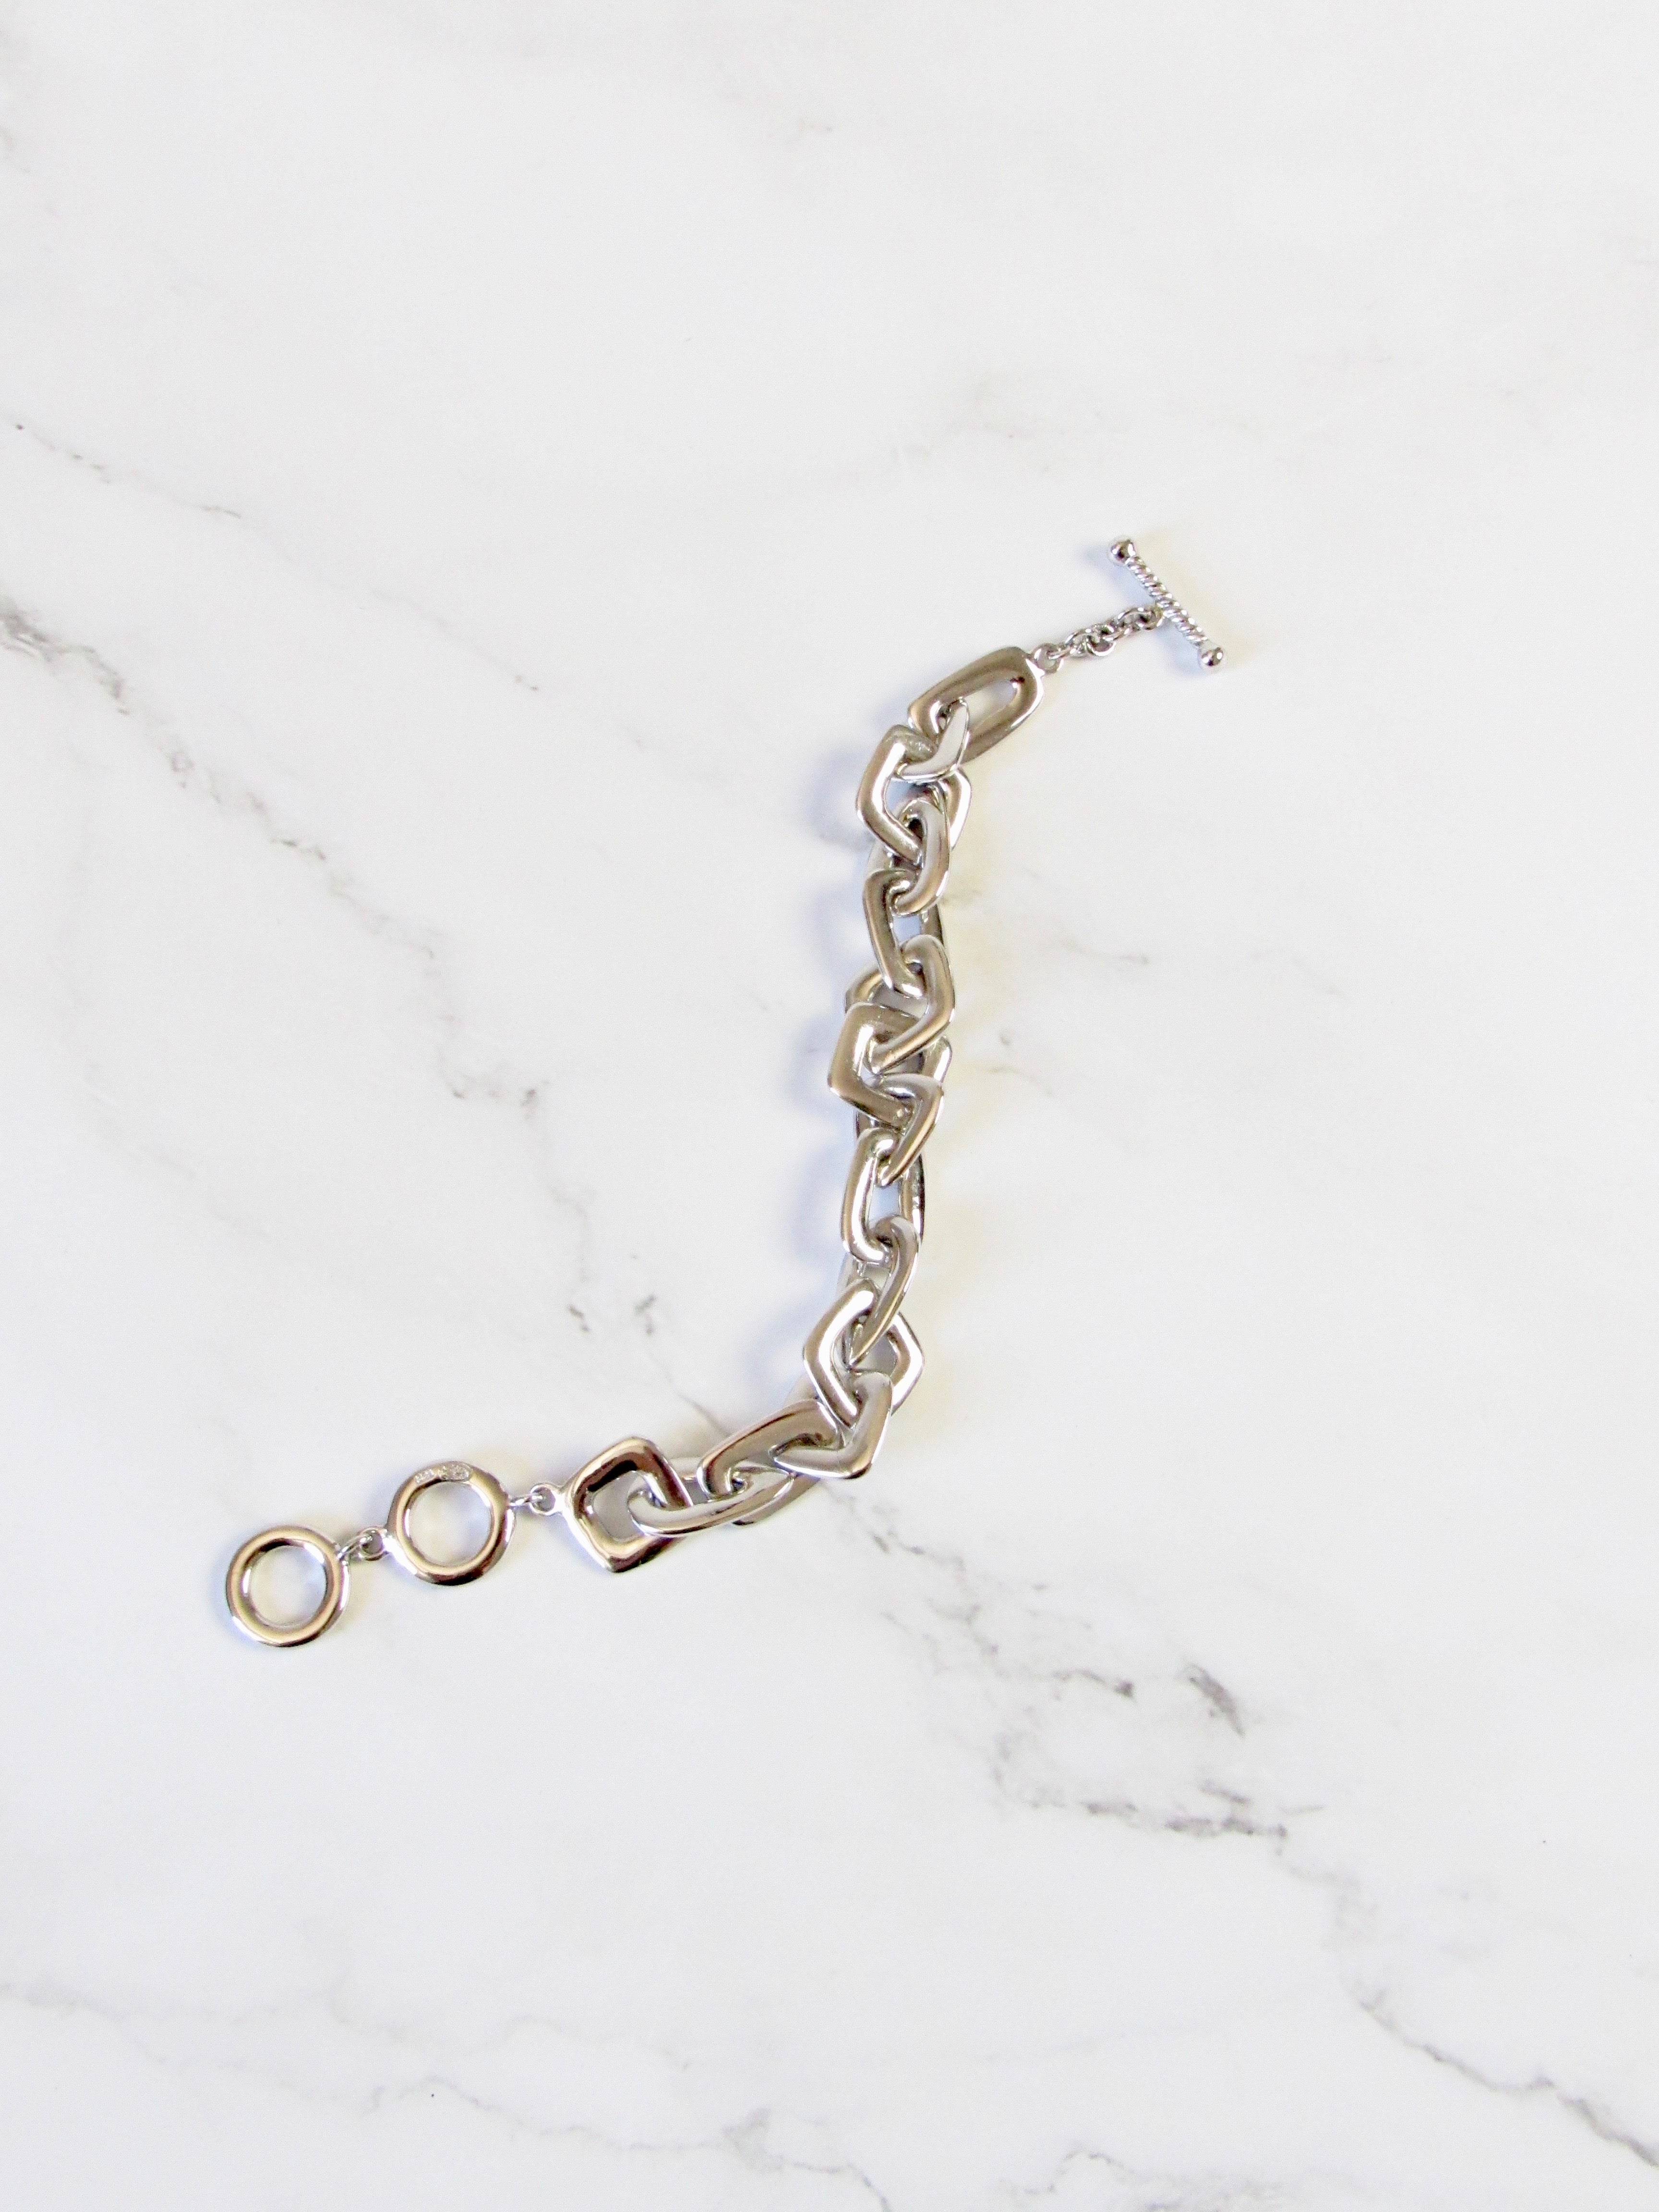 Geometric Silver Cable Chain Bracelet